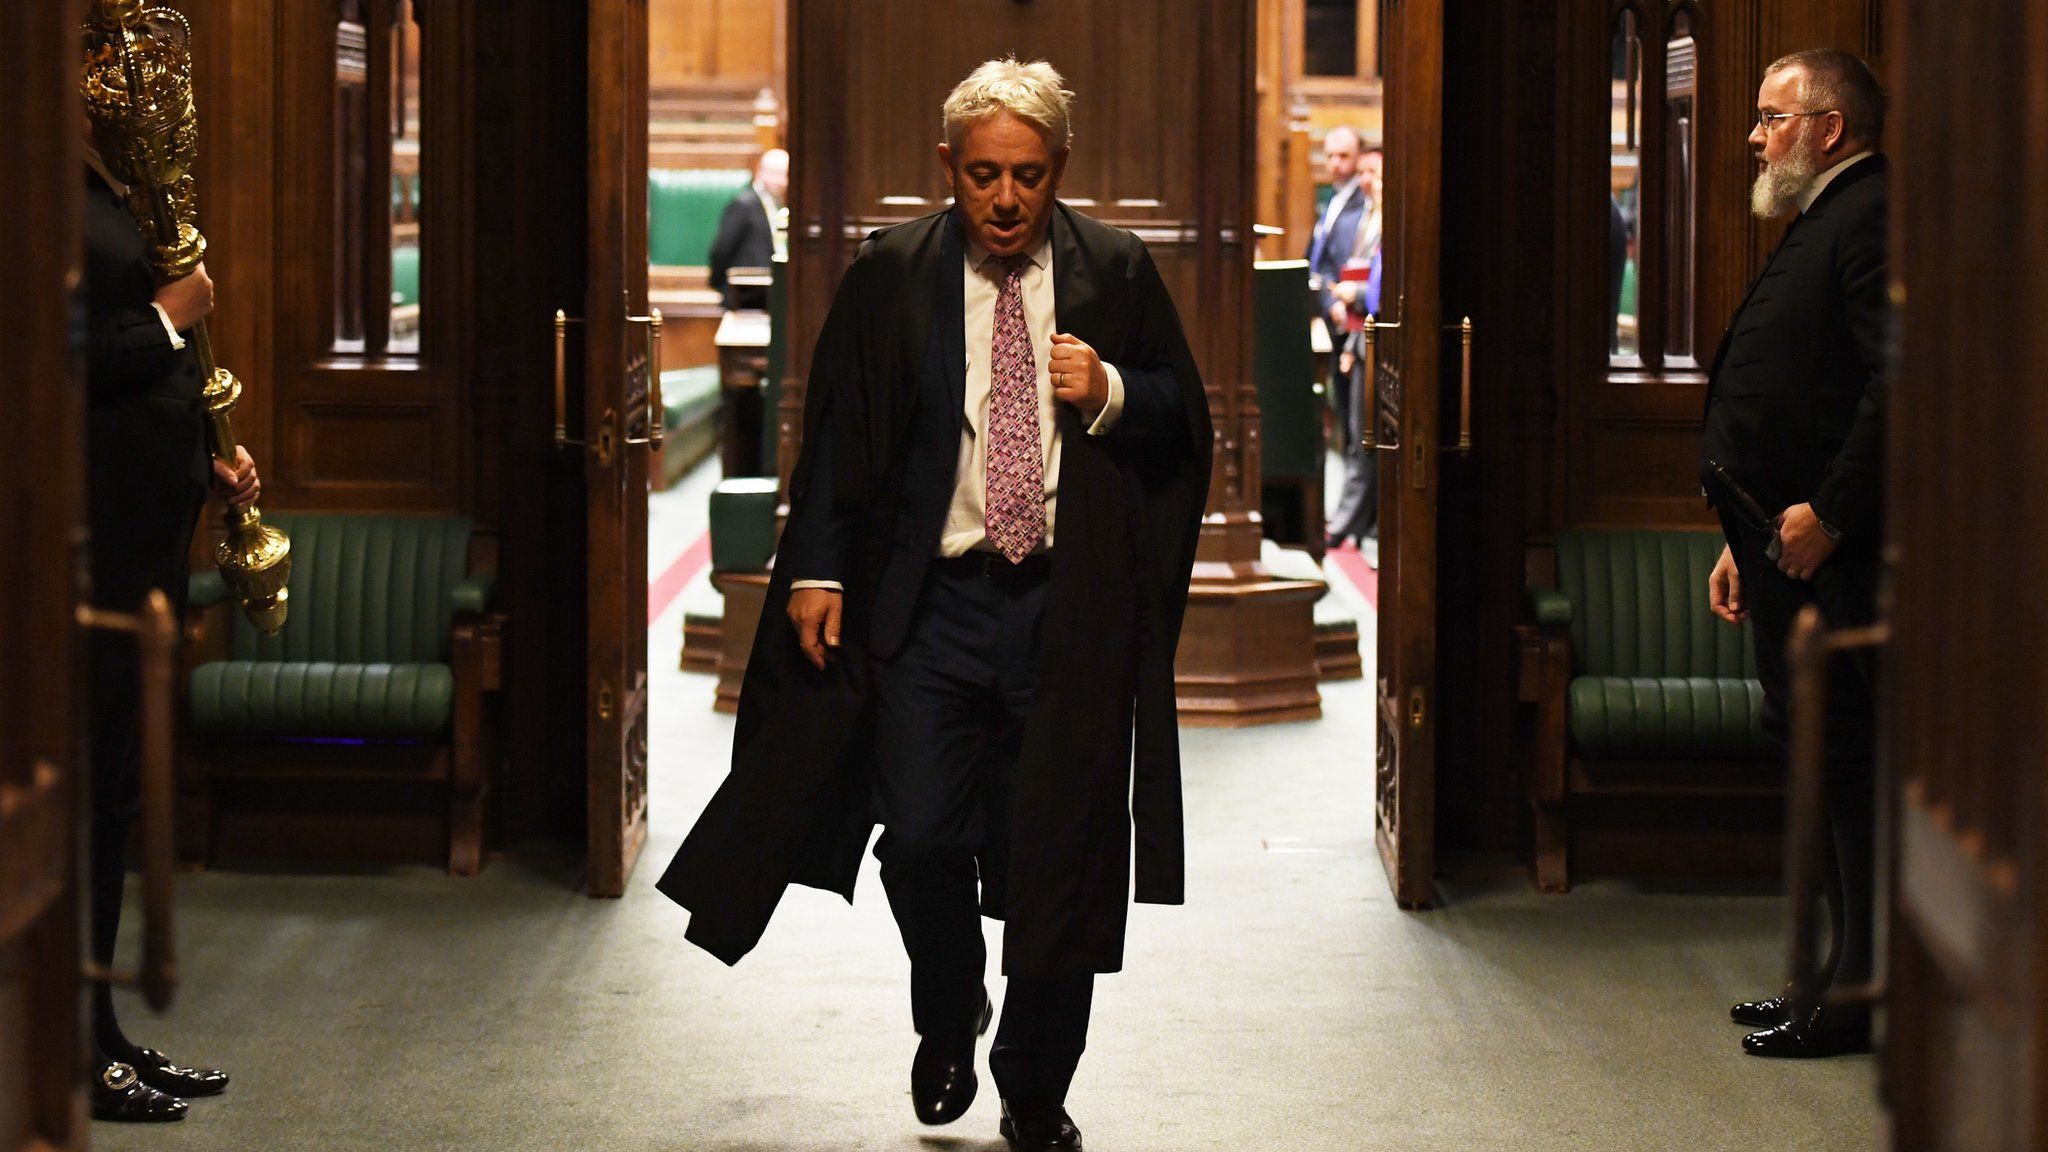 John Bercow leaving the Commons chamber